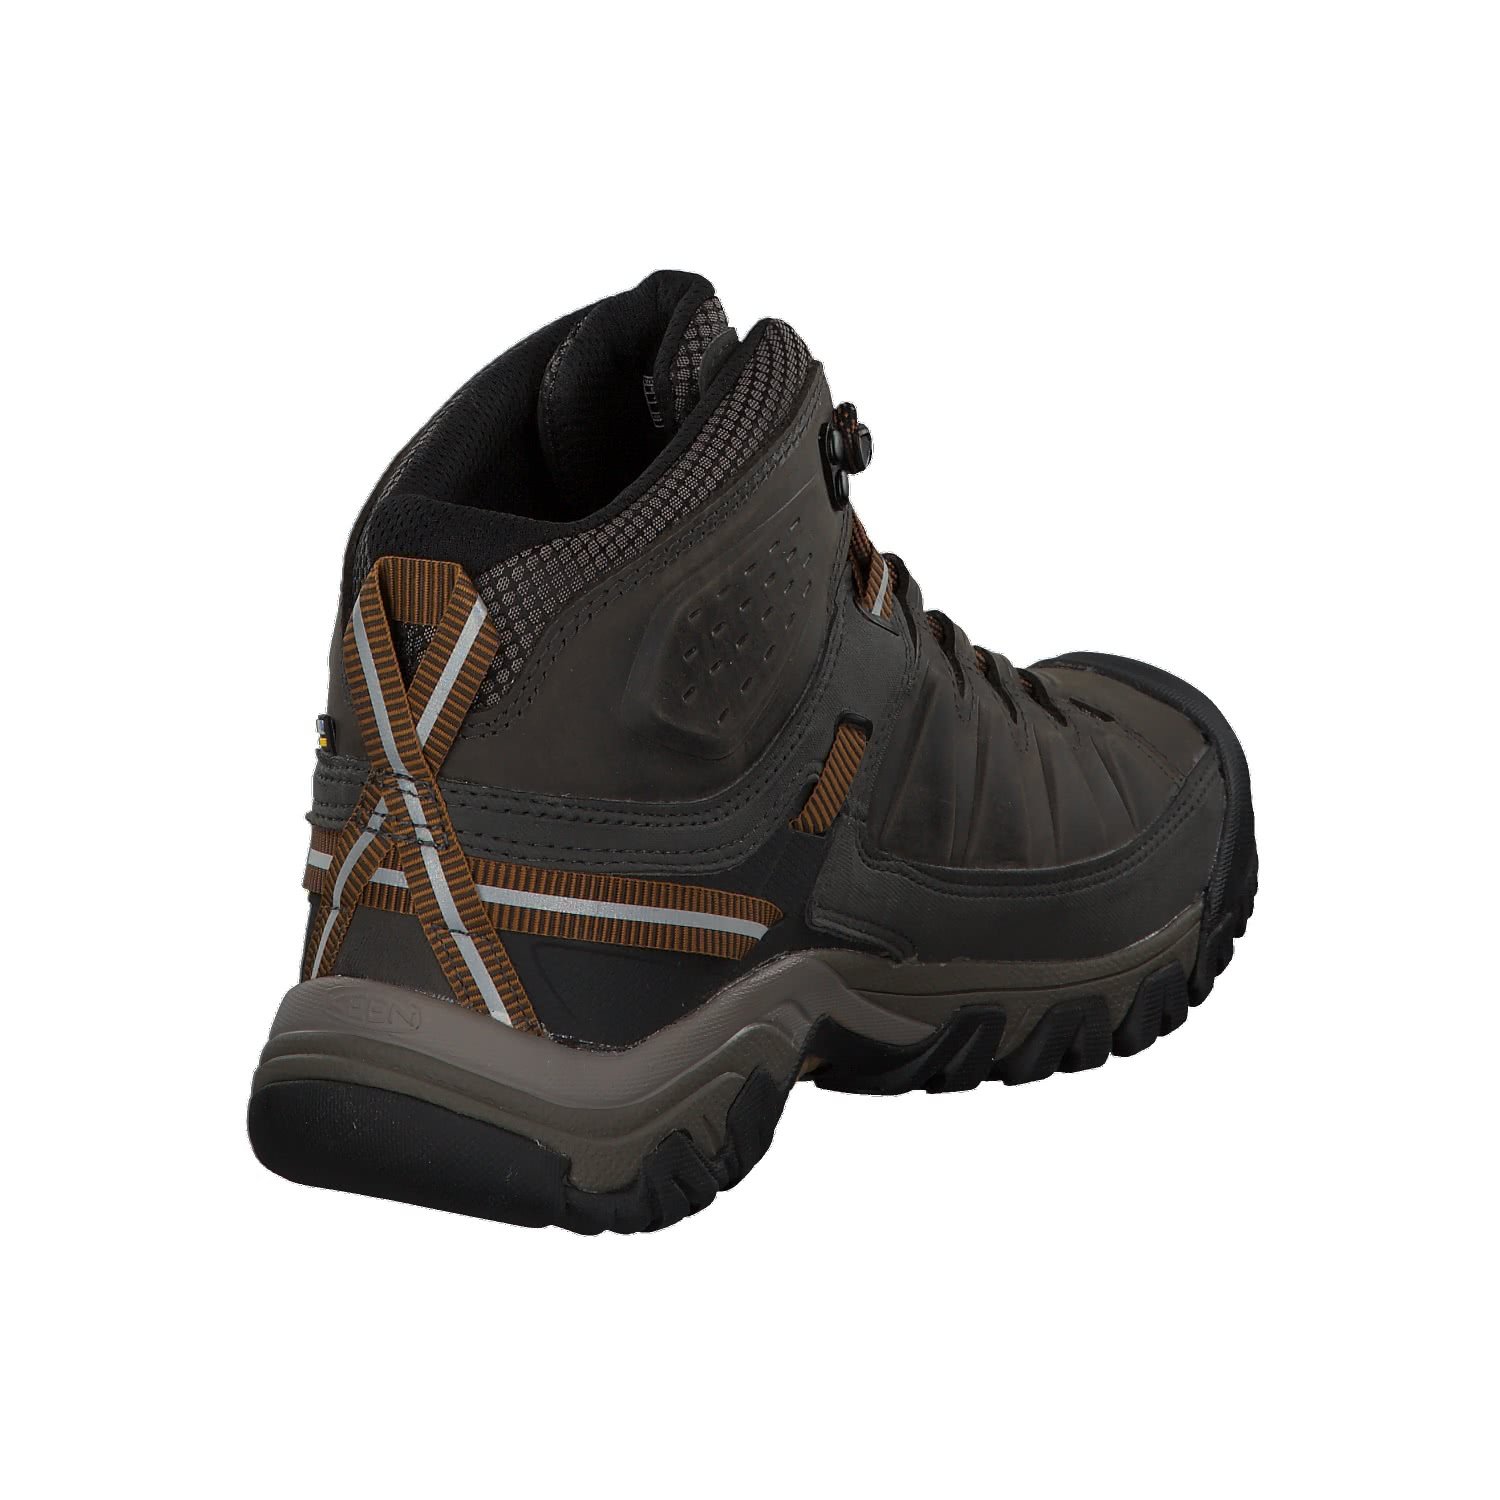 KEEN Men's Targhee 3 Mid Height Waterproof Hiking Boots, 11.5 Wide US